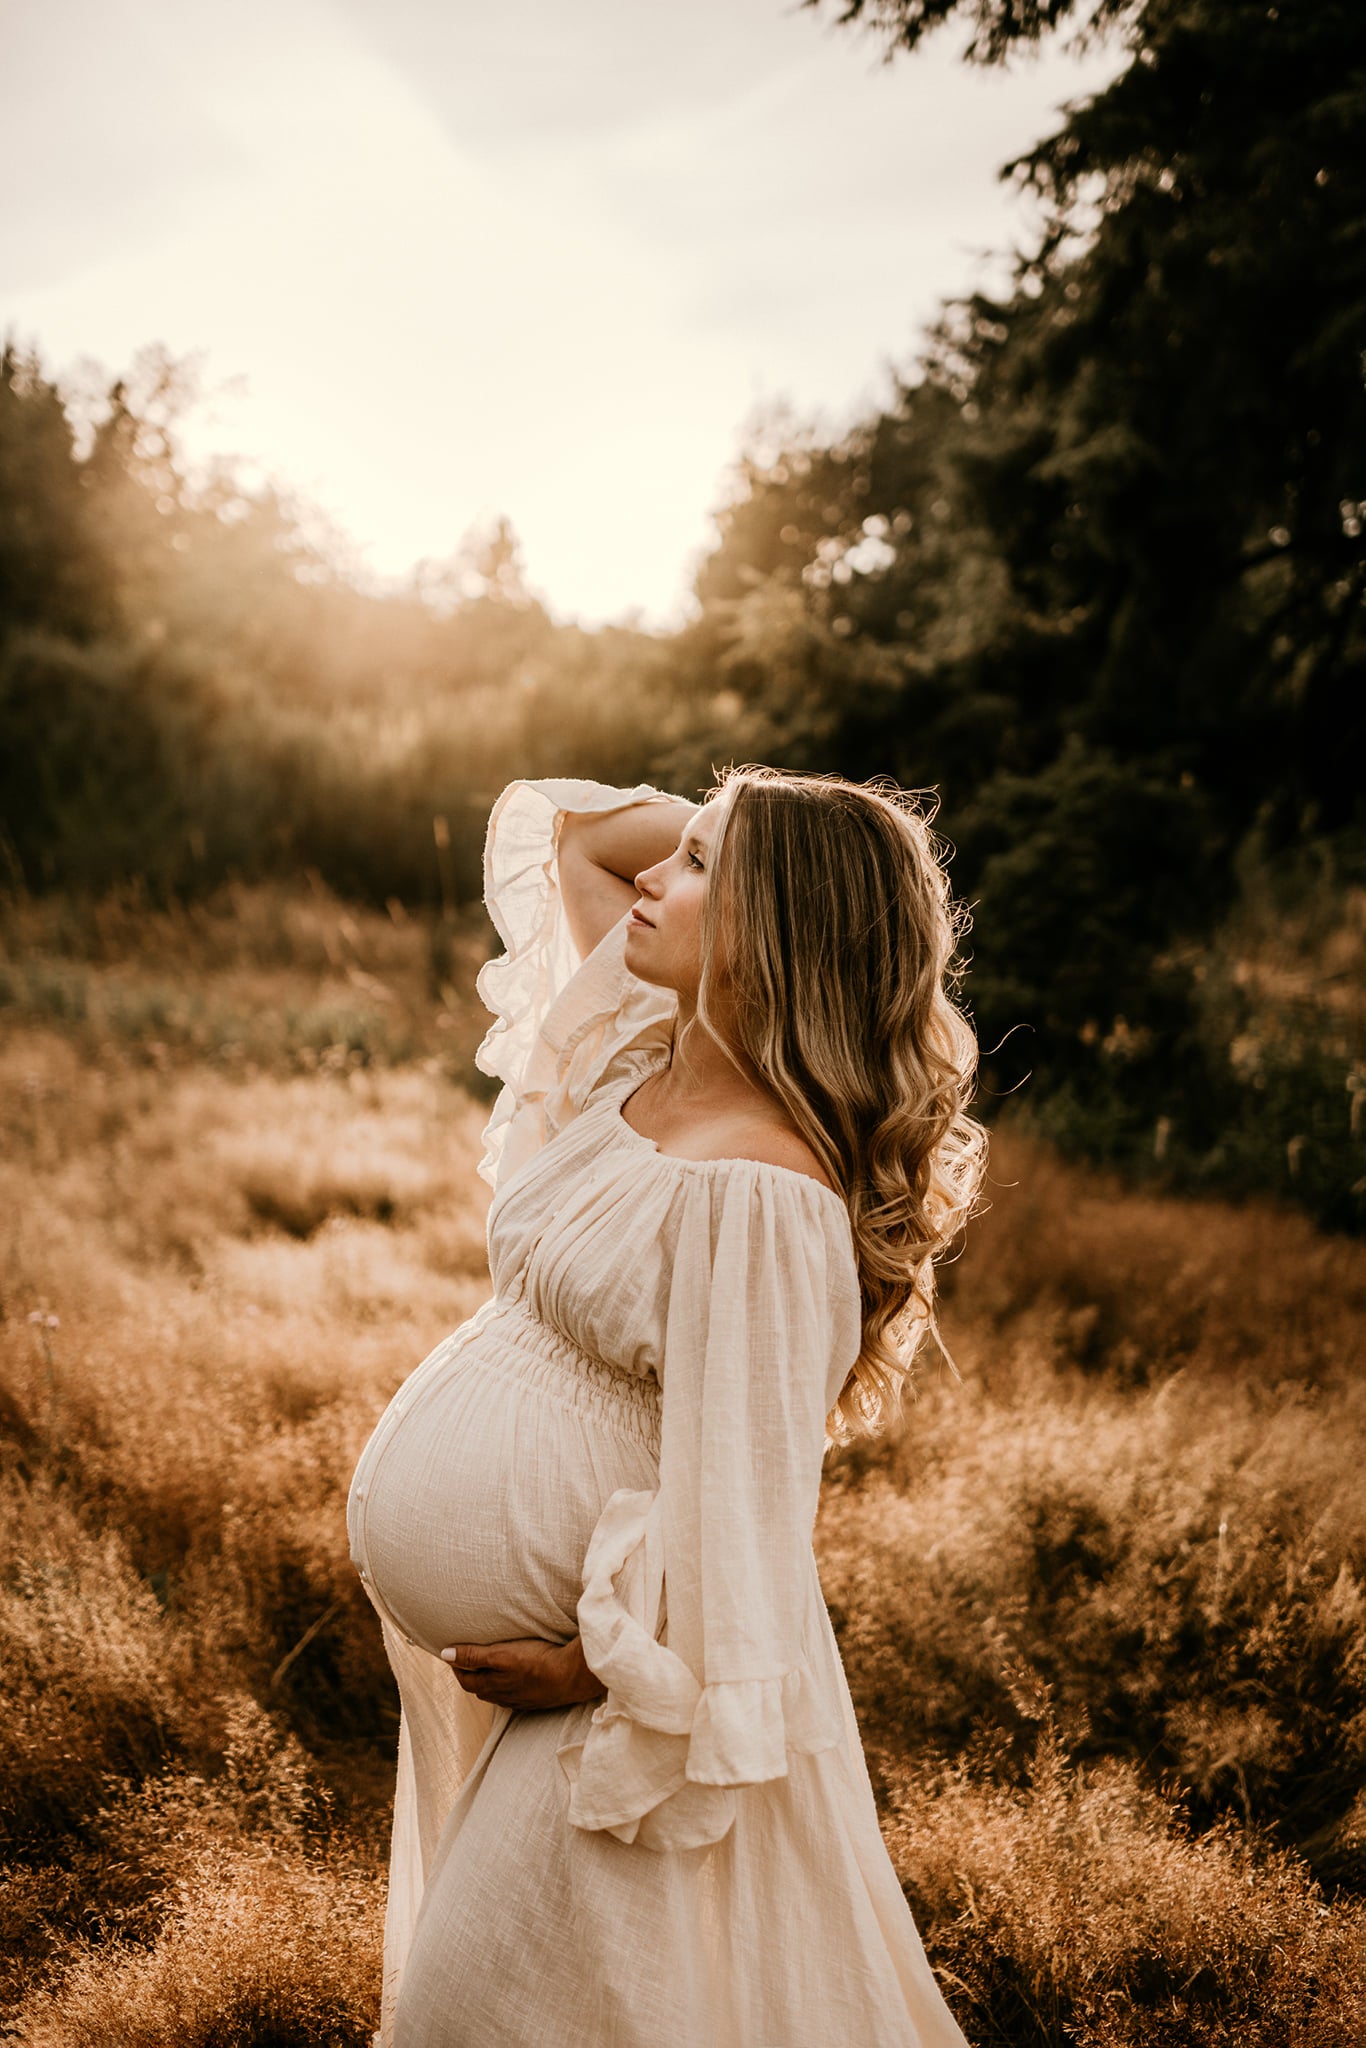 Maternity Dresses for Photo Shoot Split Deep V Neck Pregnancy Dress  Photography | eBay